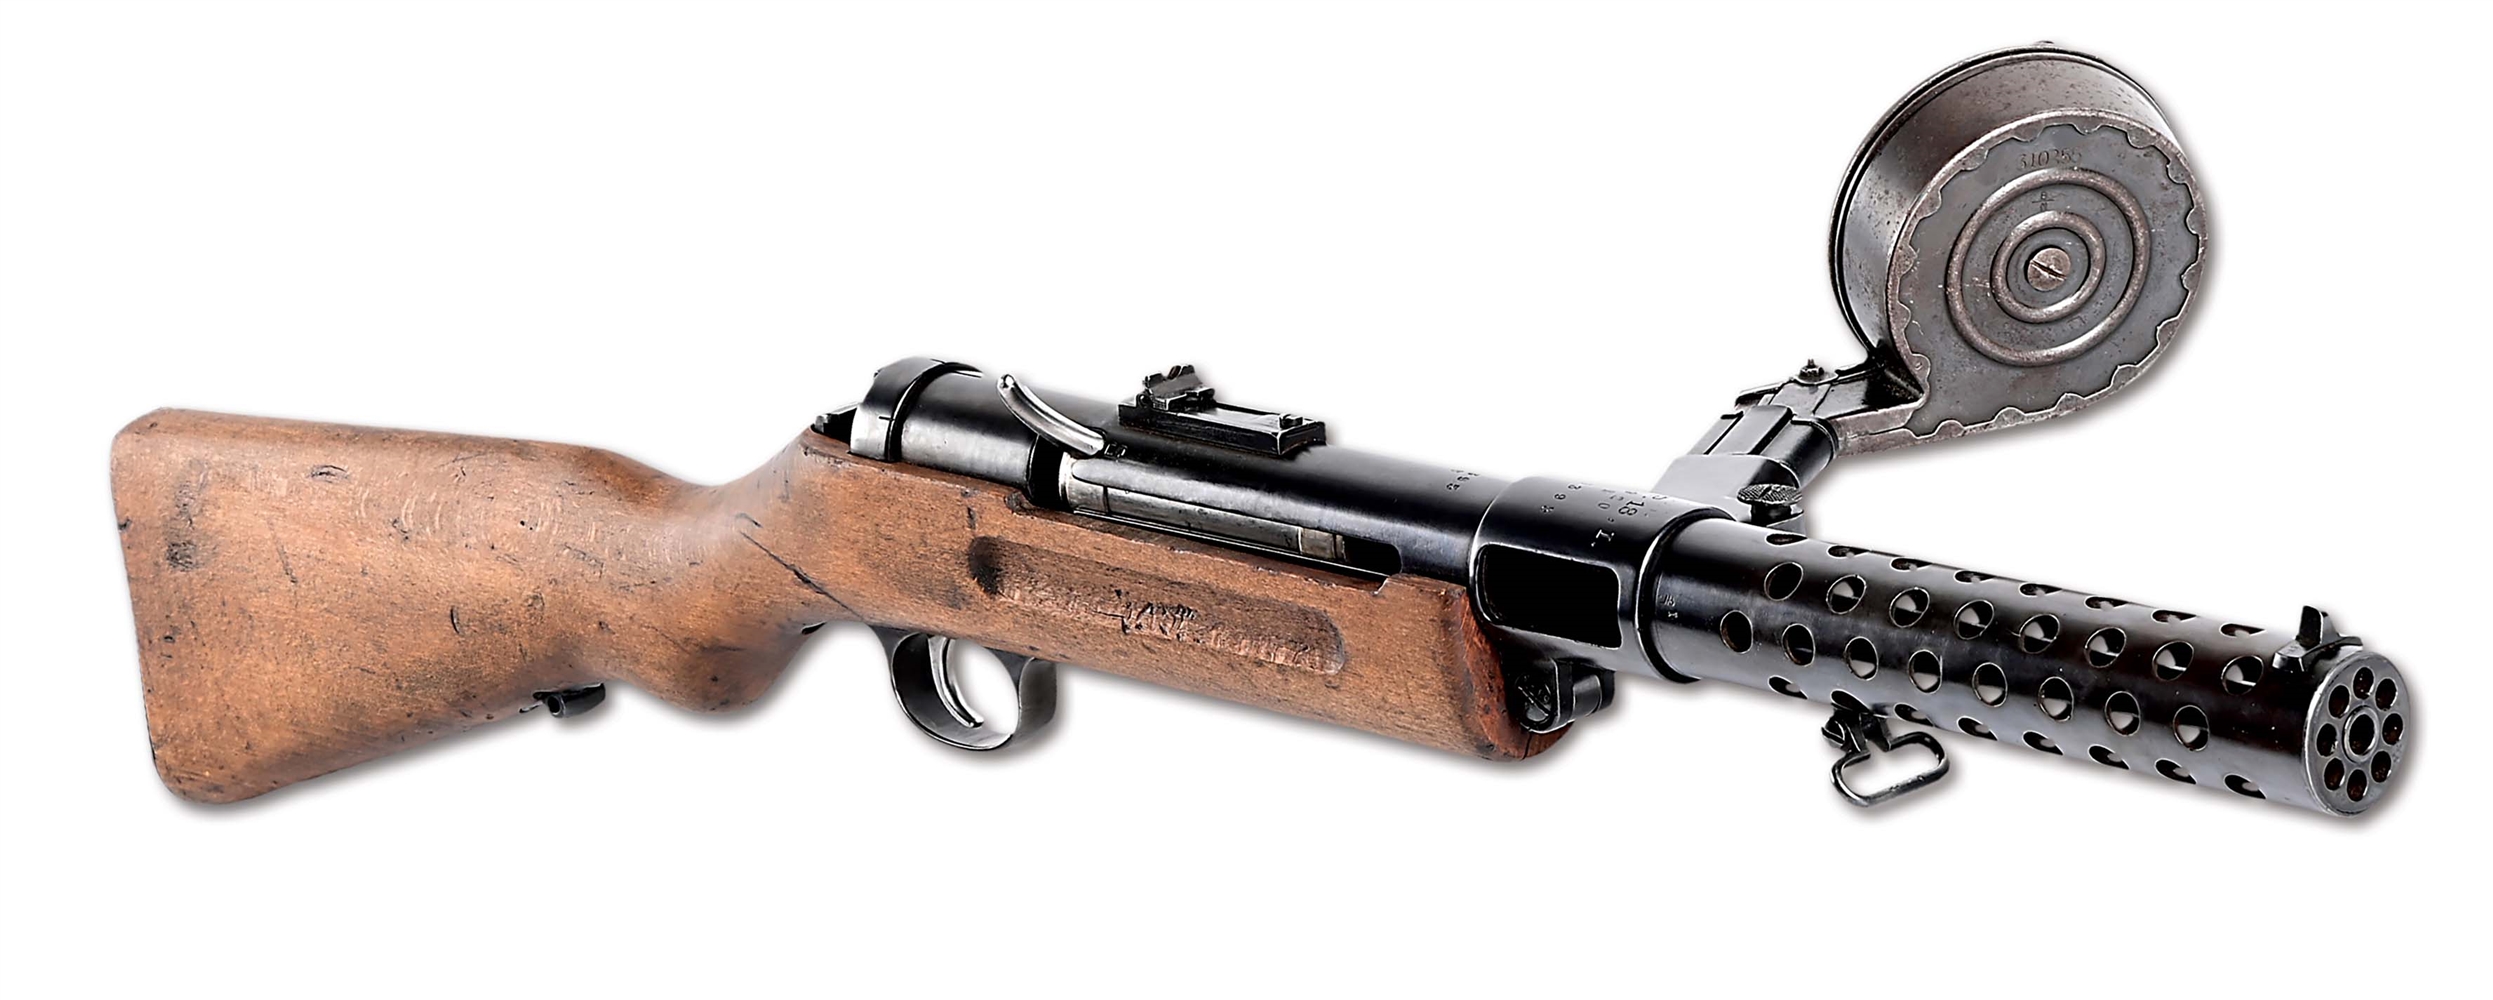 (N) ATTRACTIVE BERGMANN MP-18.I MACHINE GUN WITH ORIGINAL SNAIL DRUM (CURIO AND RELIC).